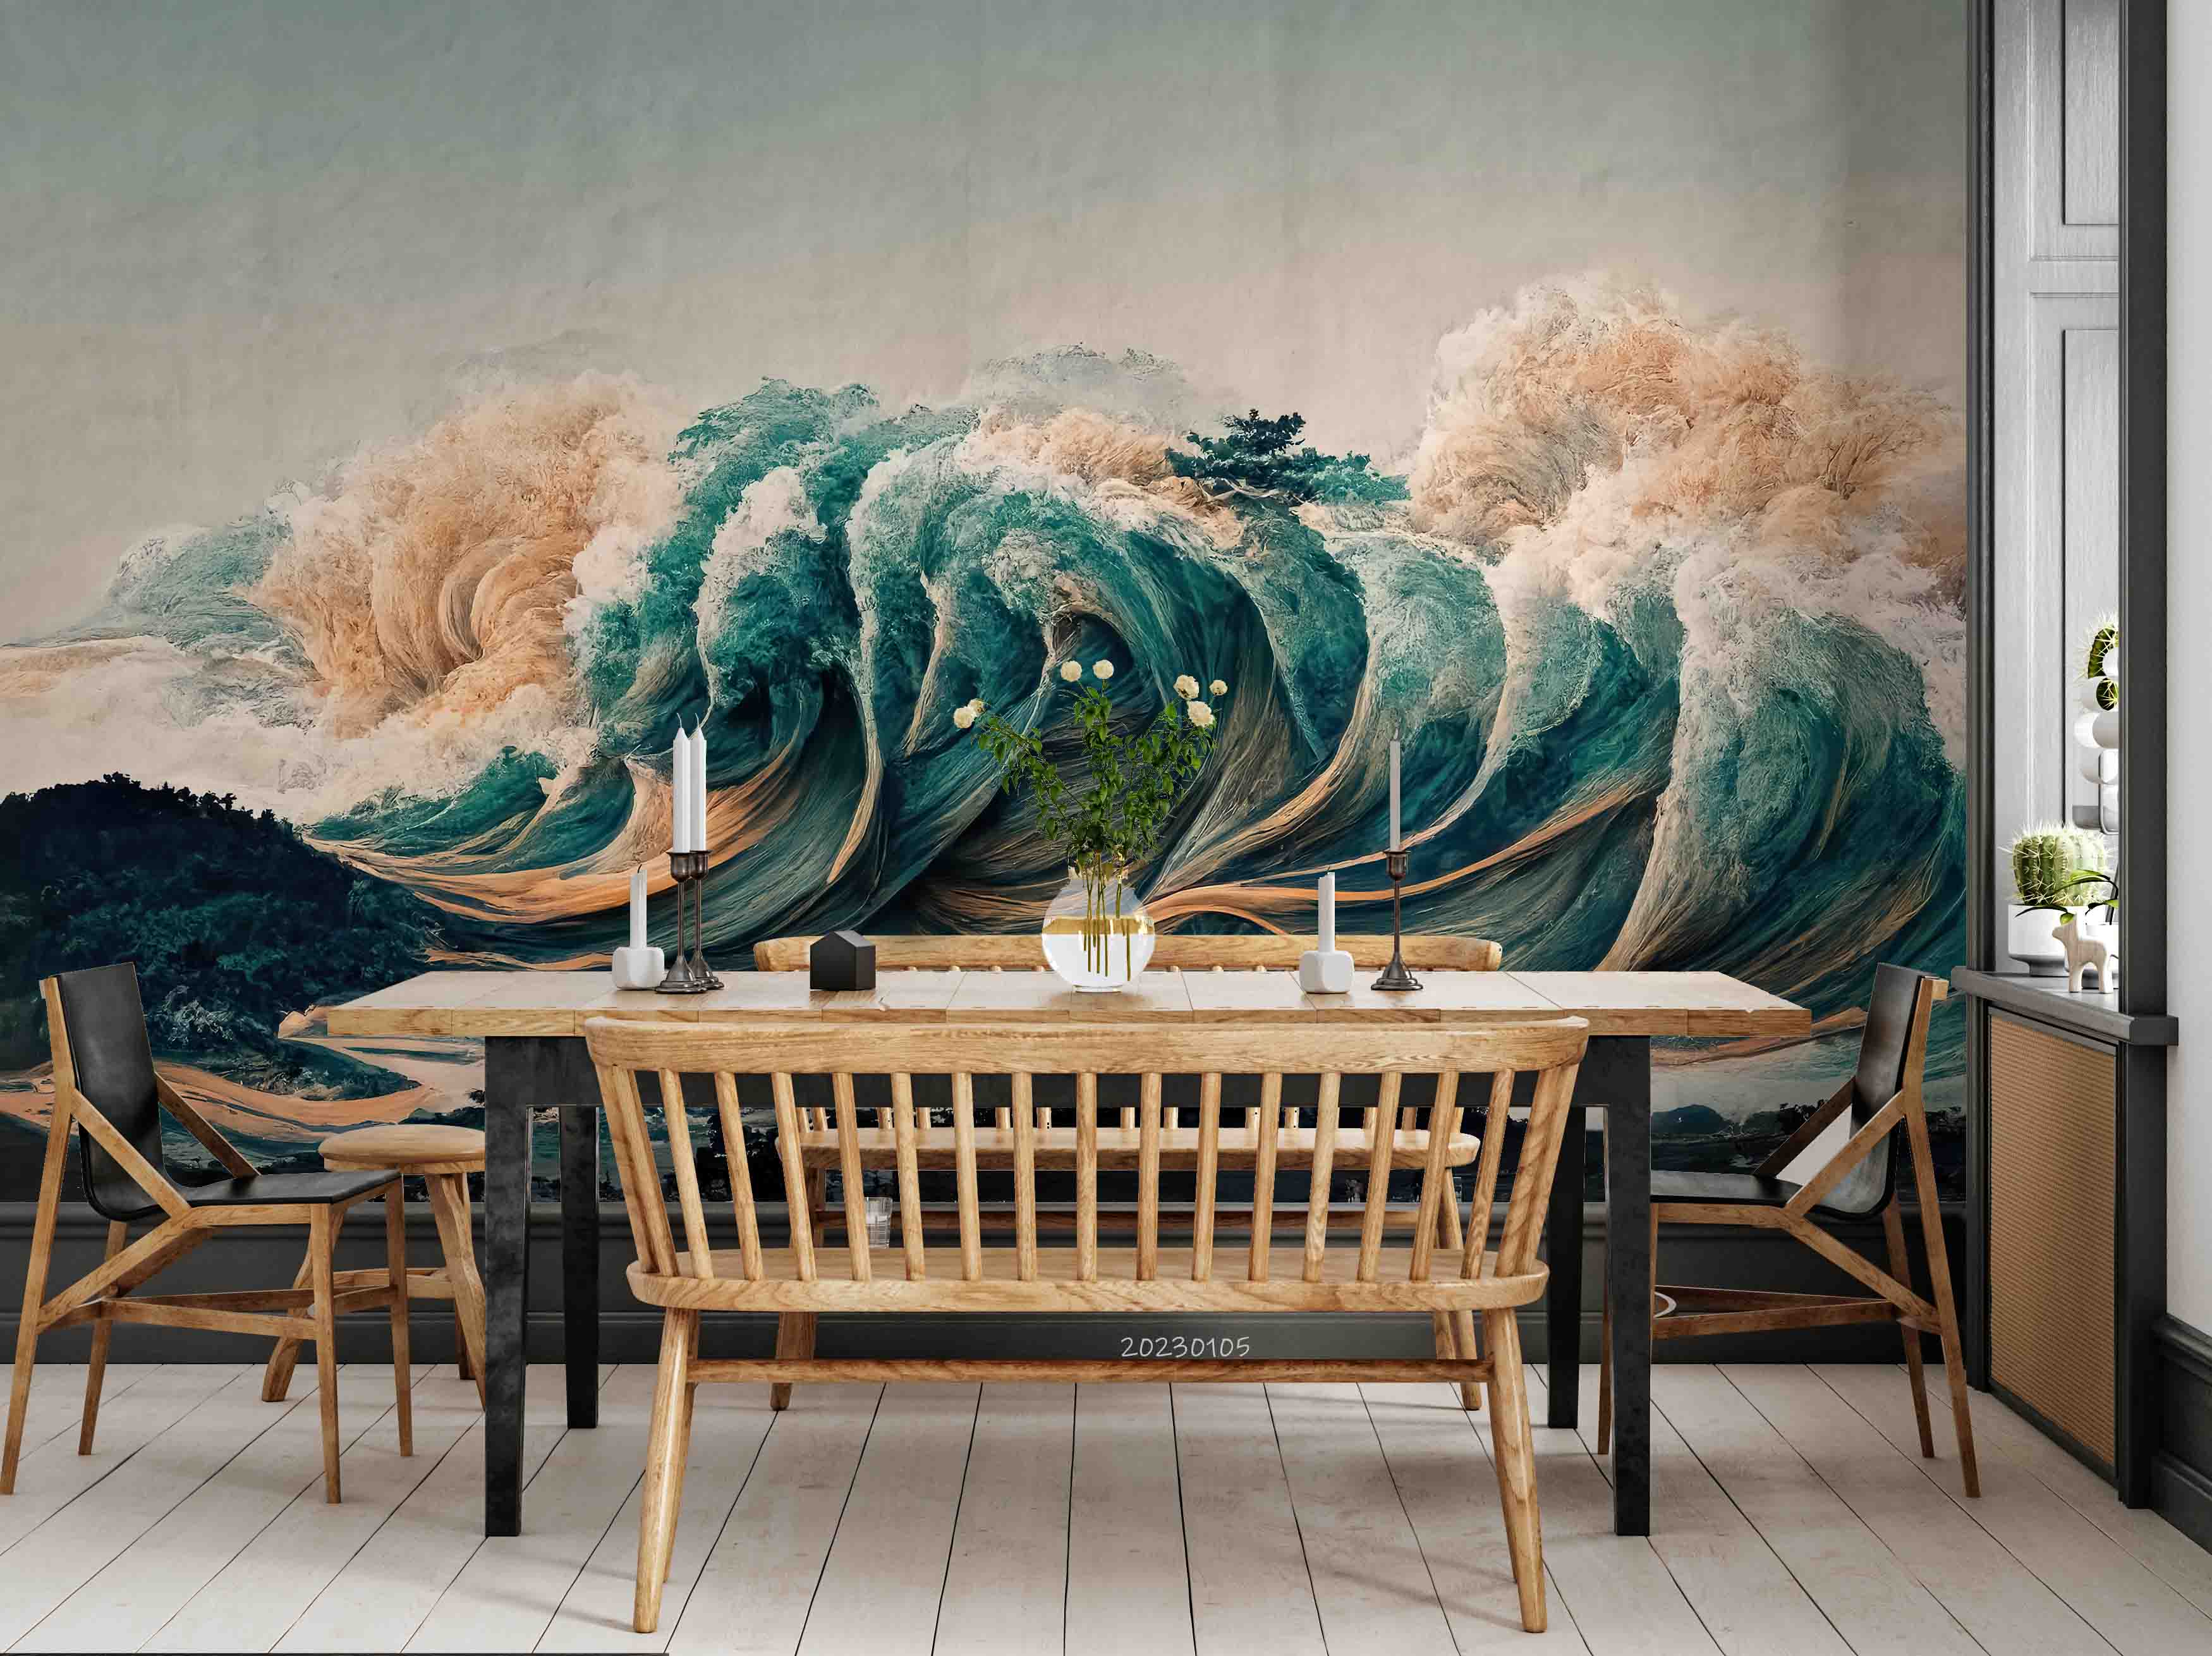 3D Vintage Japanese Watercolor Waves Texture Wall Mural Wallpaper GD 1853- Jess Art Decoration